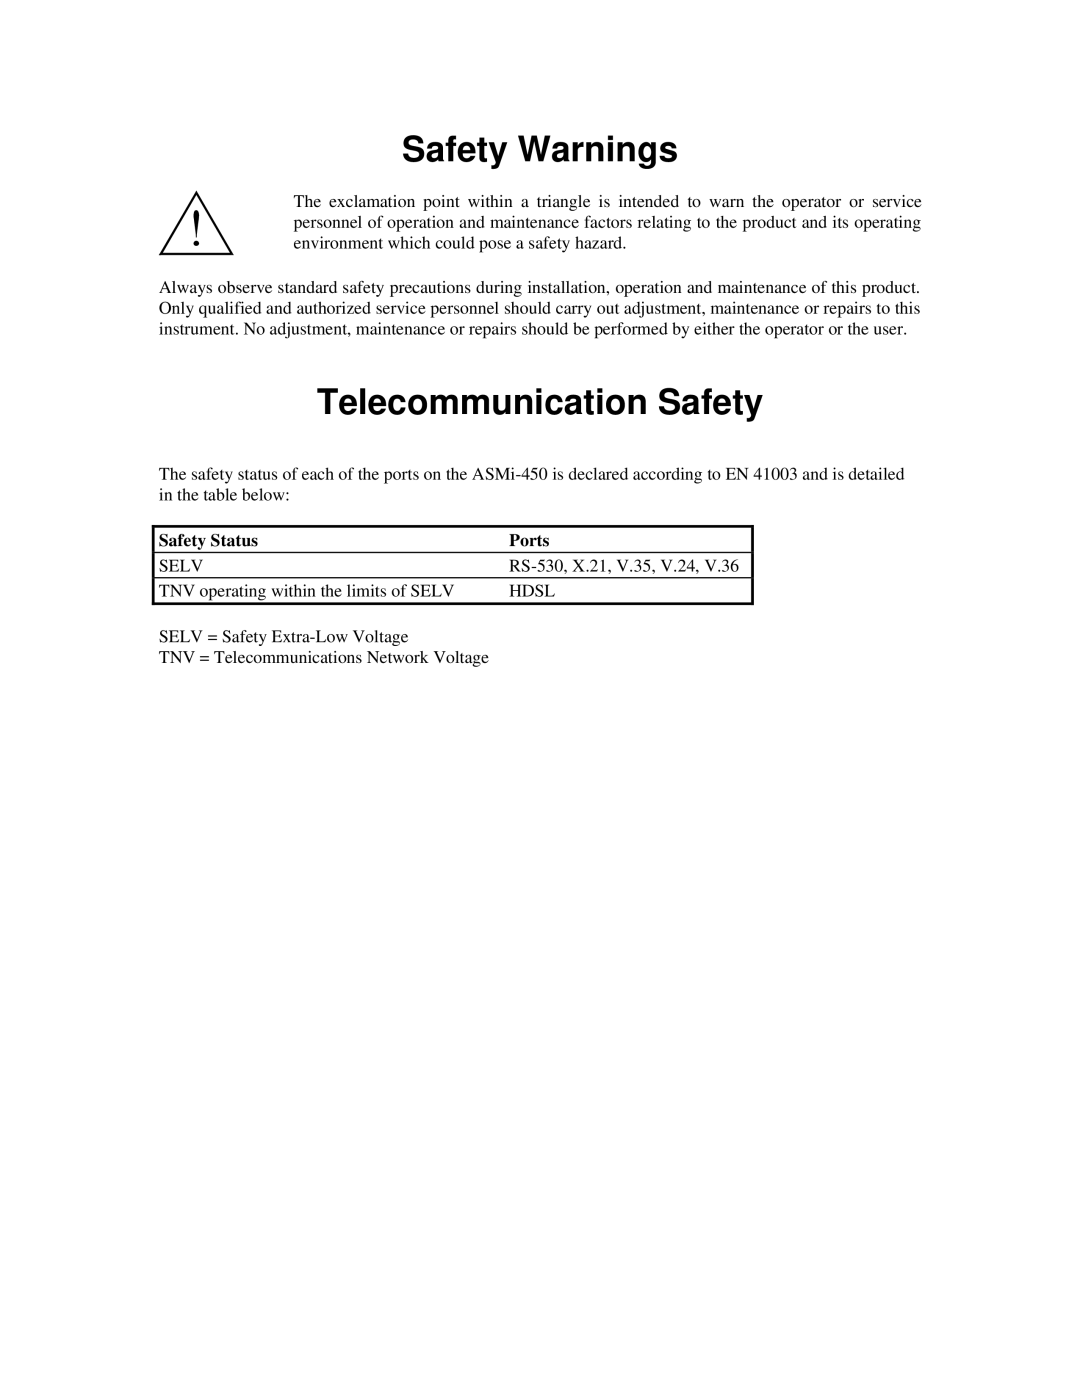 RAD Data comm ASMI-450 operation manual Safety Warnings, Telecommunication Safety, Safety Status, Ports 